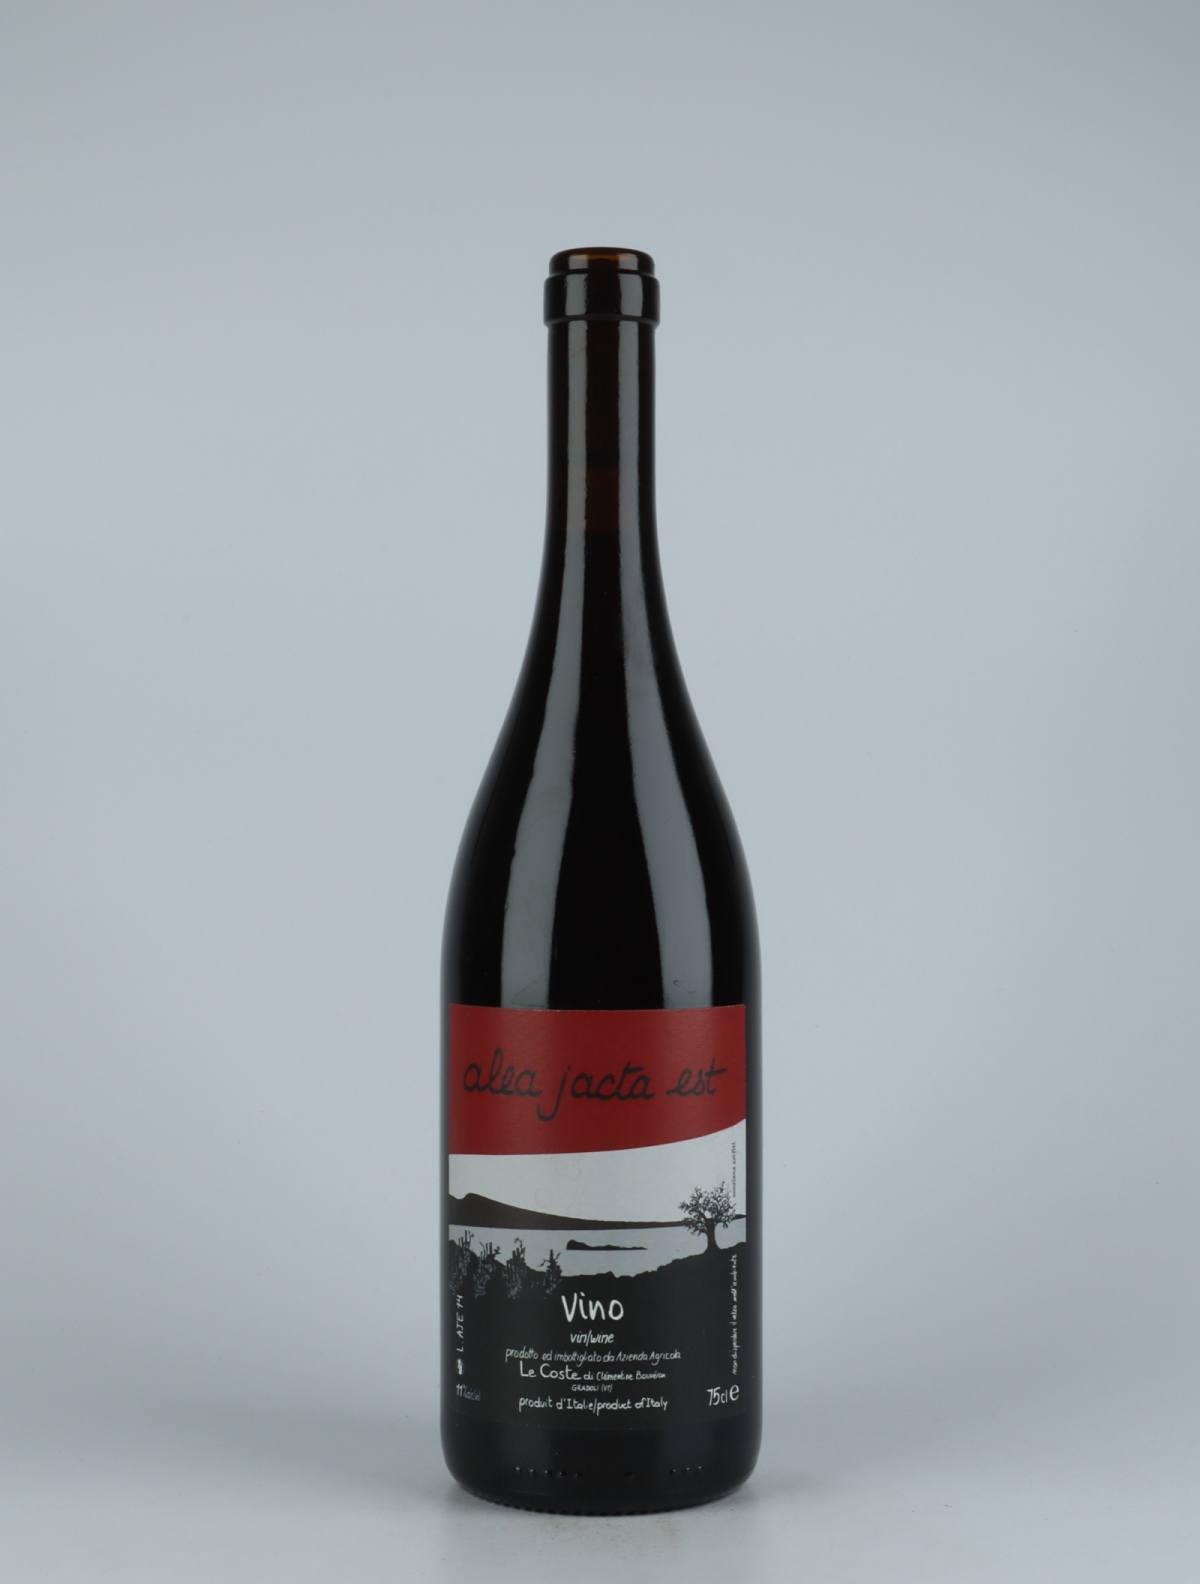 A bottle 2014 Alea Jacta Est Red wine from Le Coste, Lazio in Italy